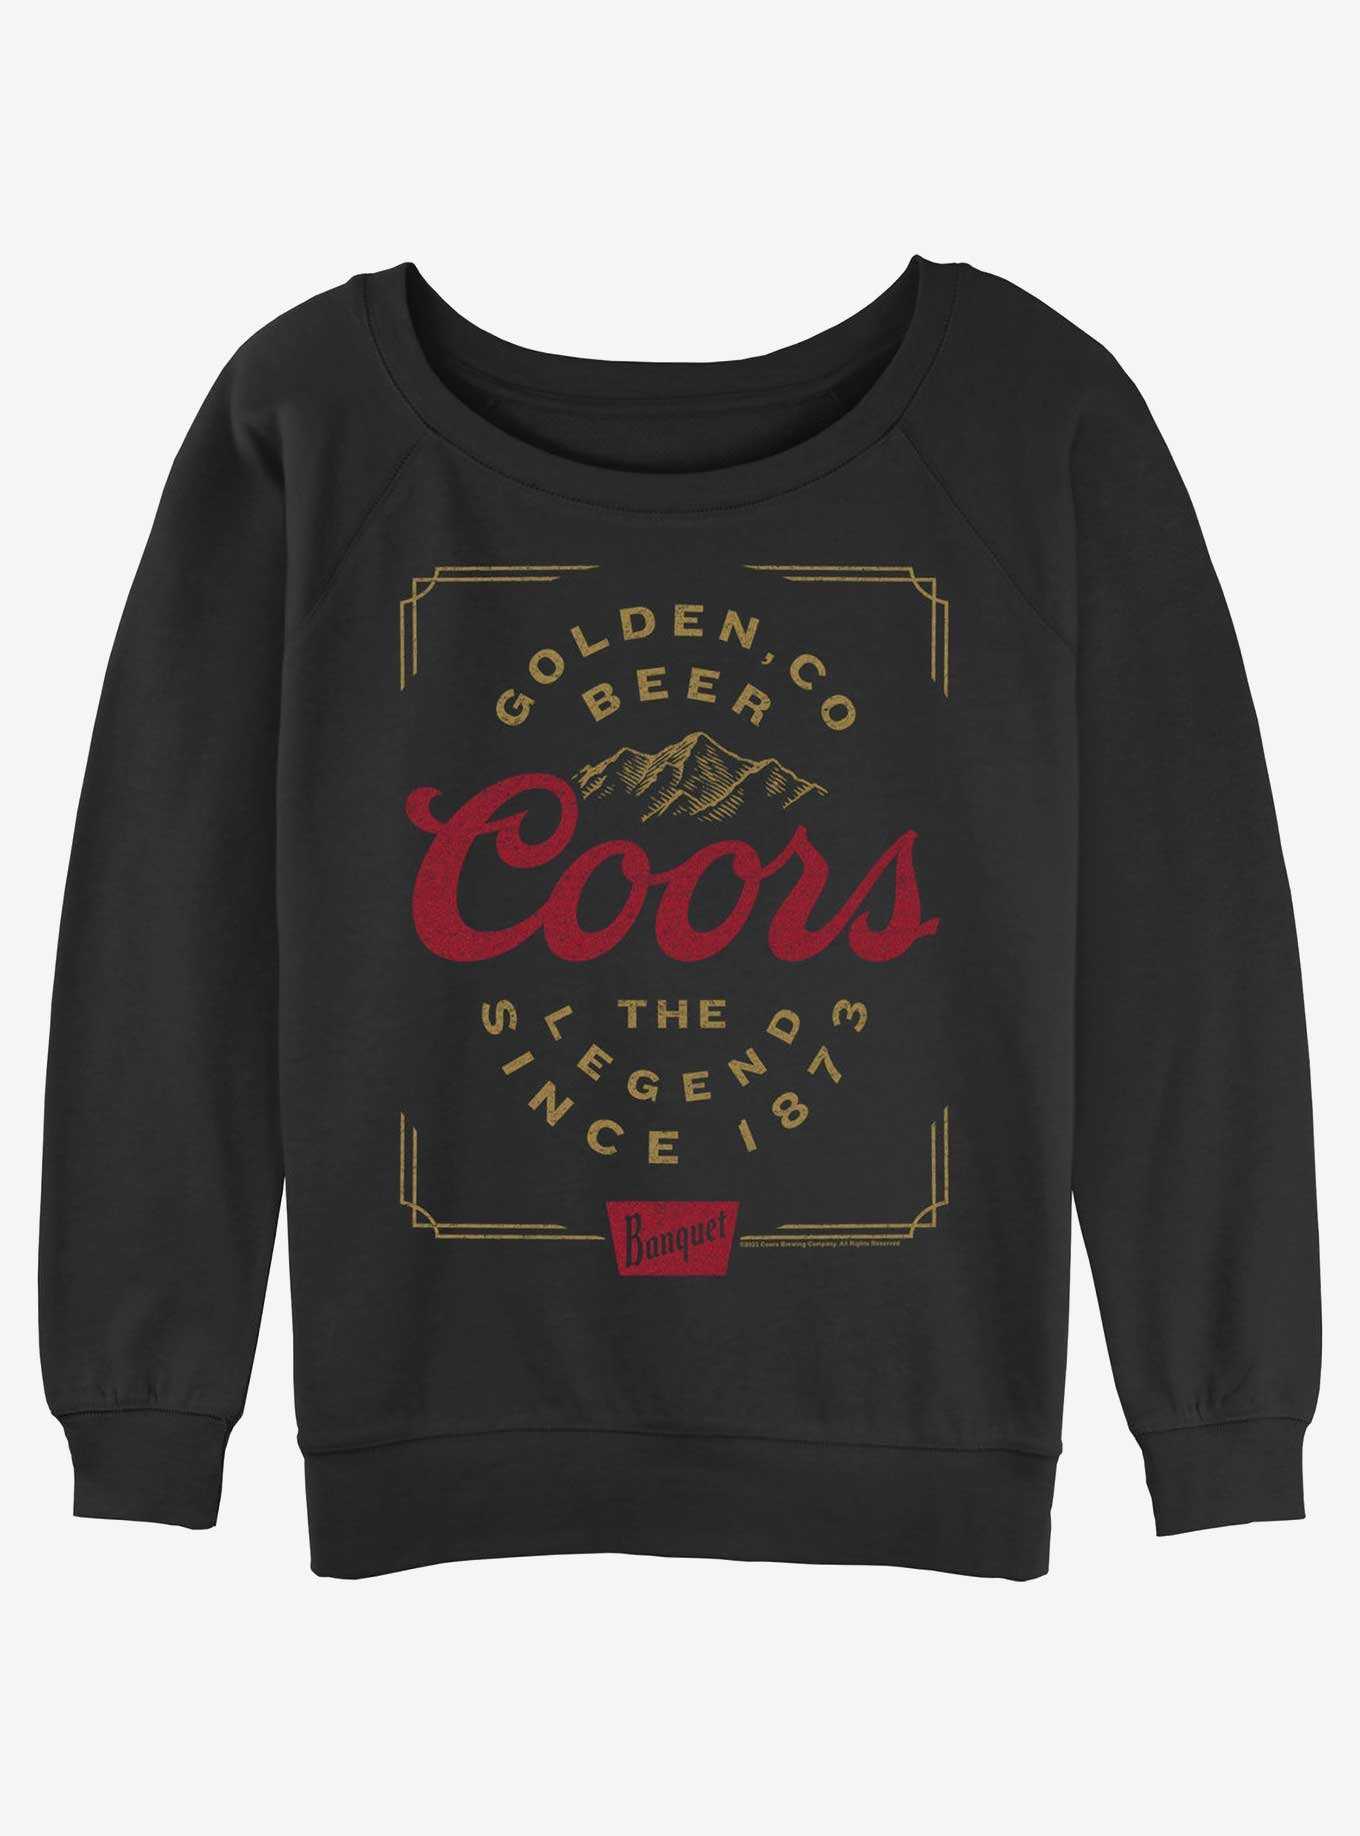 Coors Vintage Golden Beer Logo Womens Slouchy Sweatshirt, , hi-res